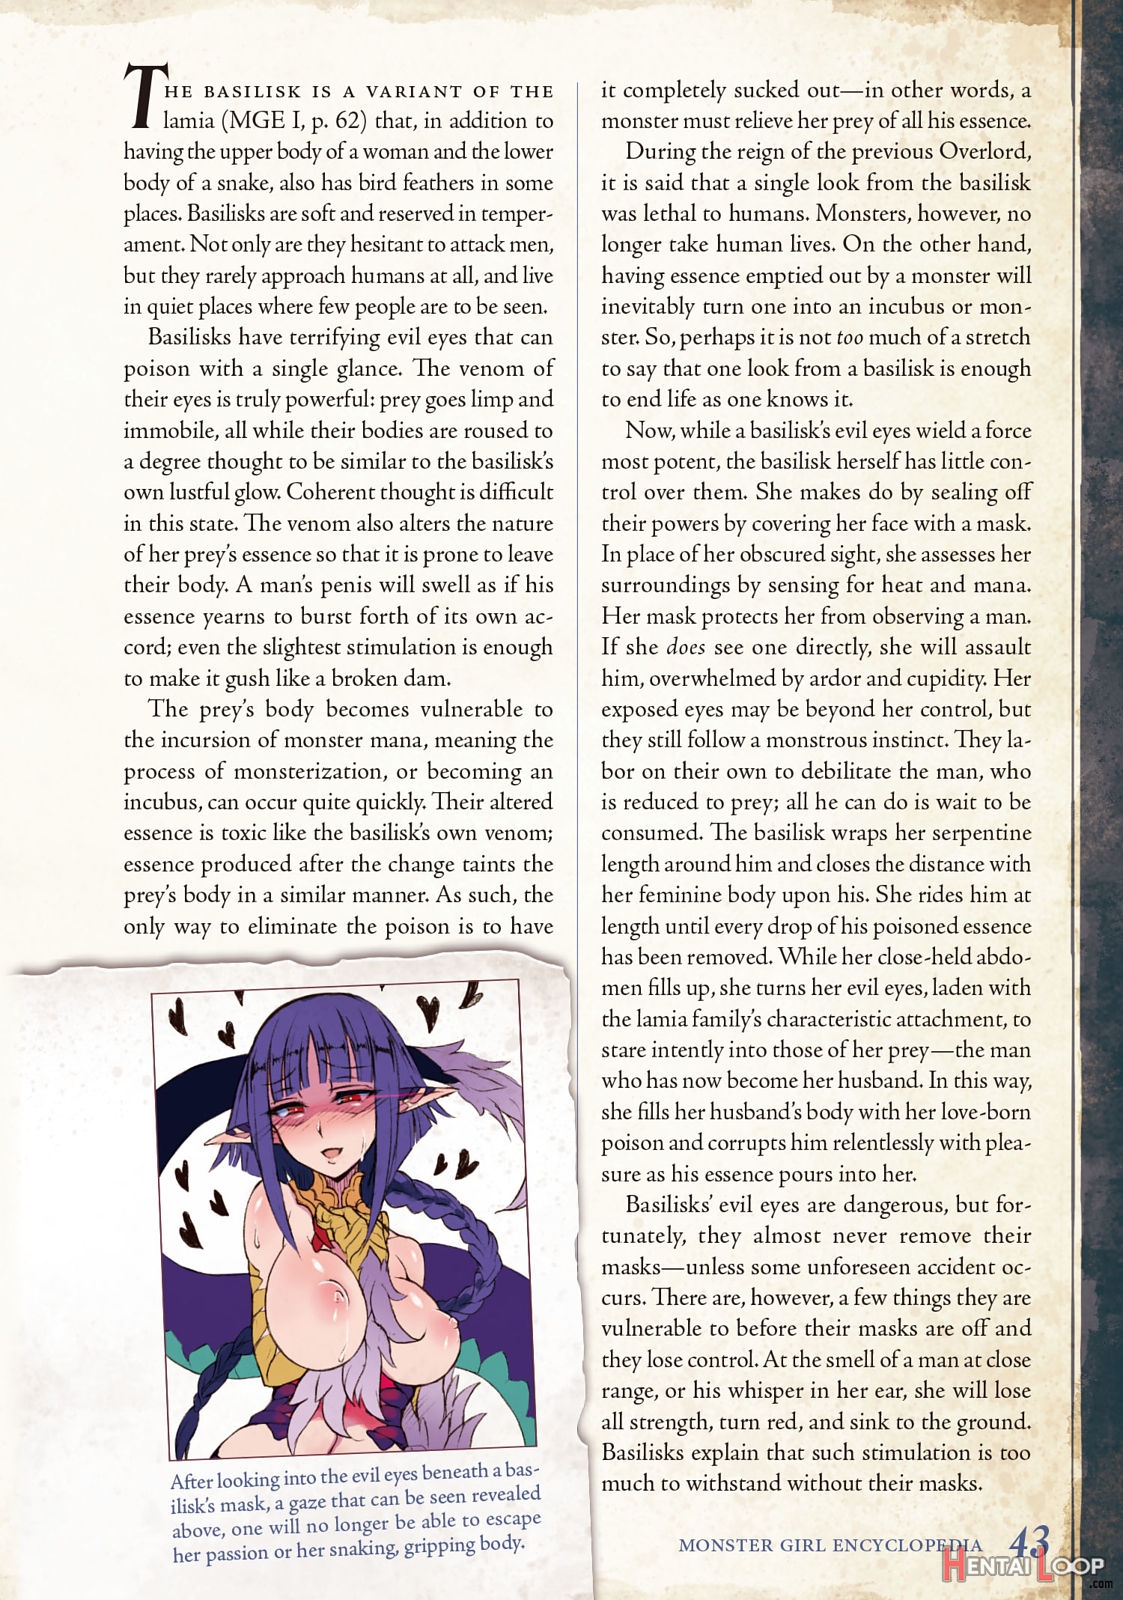 Monster Girl Encyclopedia Vol. 2 page 44